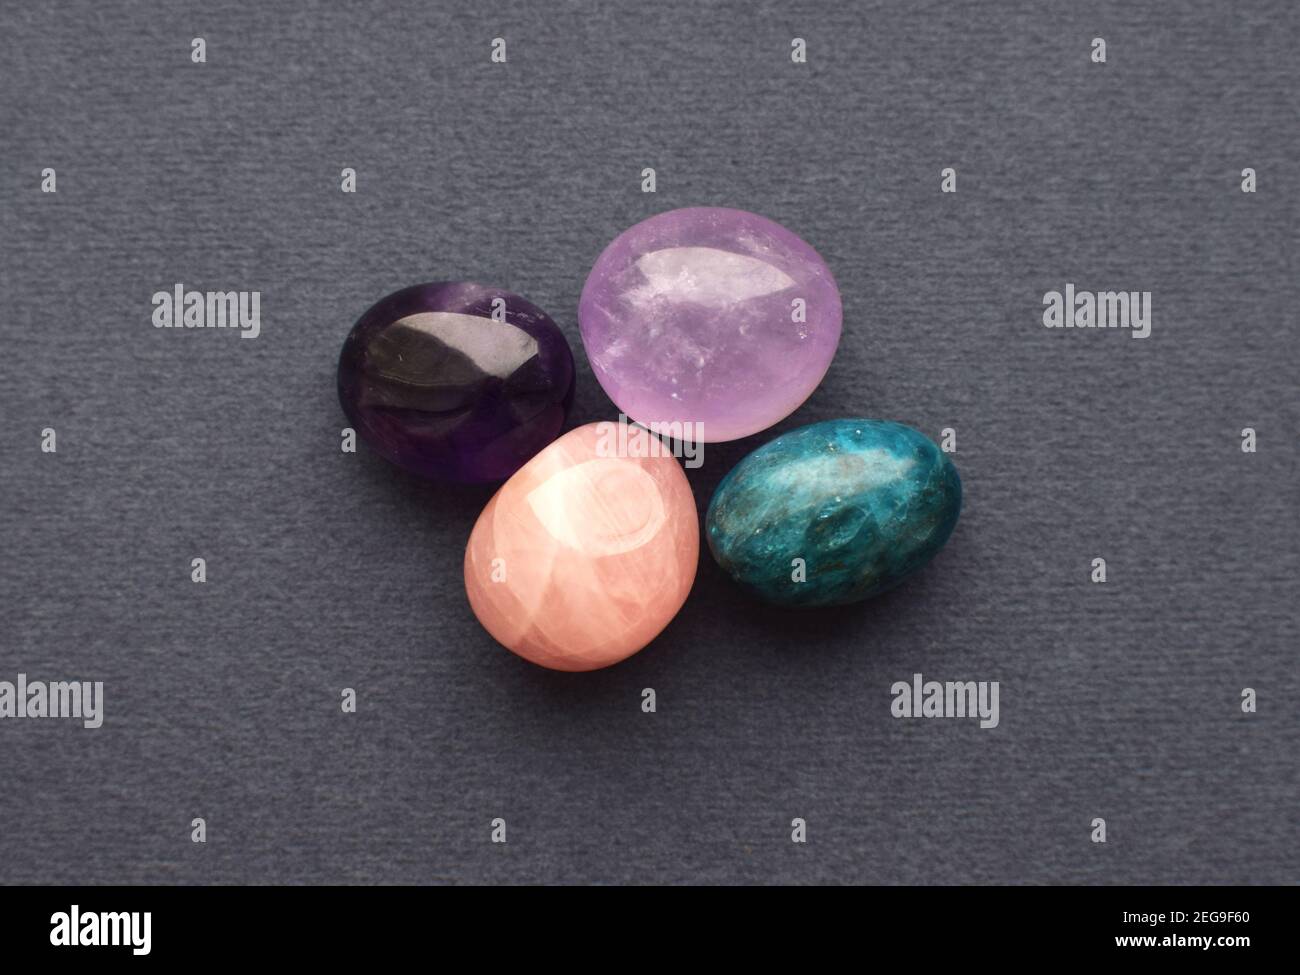 Multi-colored gemstones, cut tumbling stones. Amethyst, rose quartz, apatite  on a gray background. Stock Photo